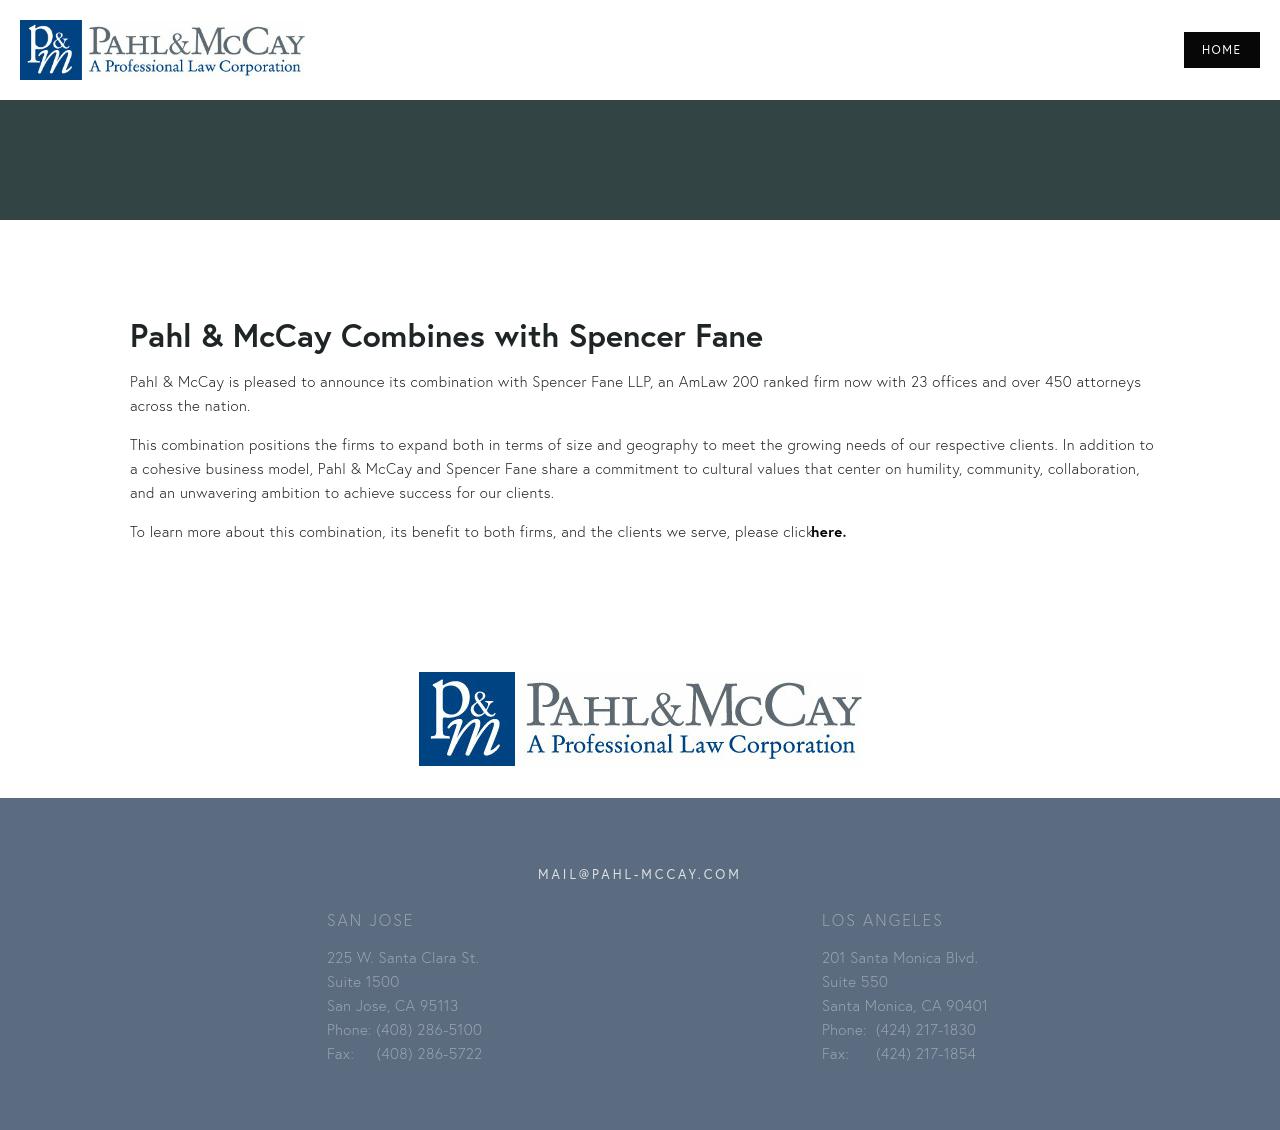 Pahl & McCay - San Jose CA Lawyers